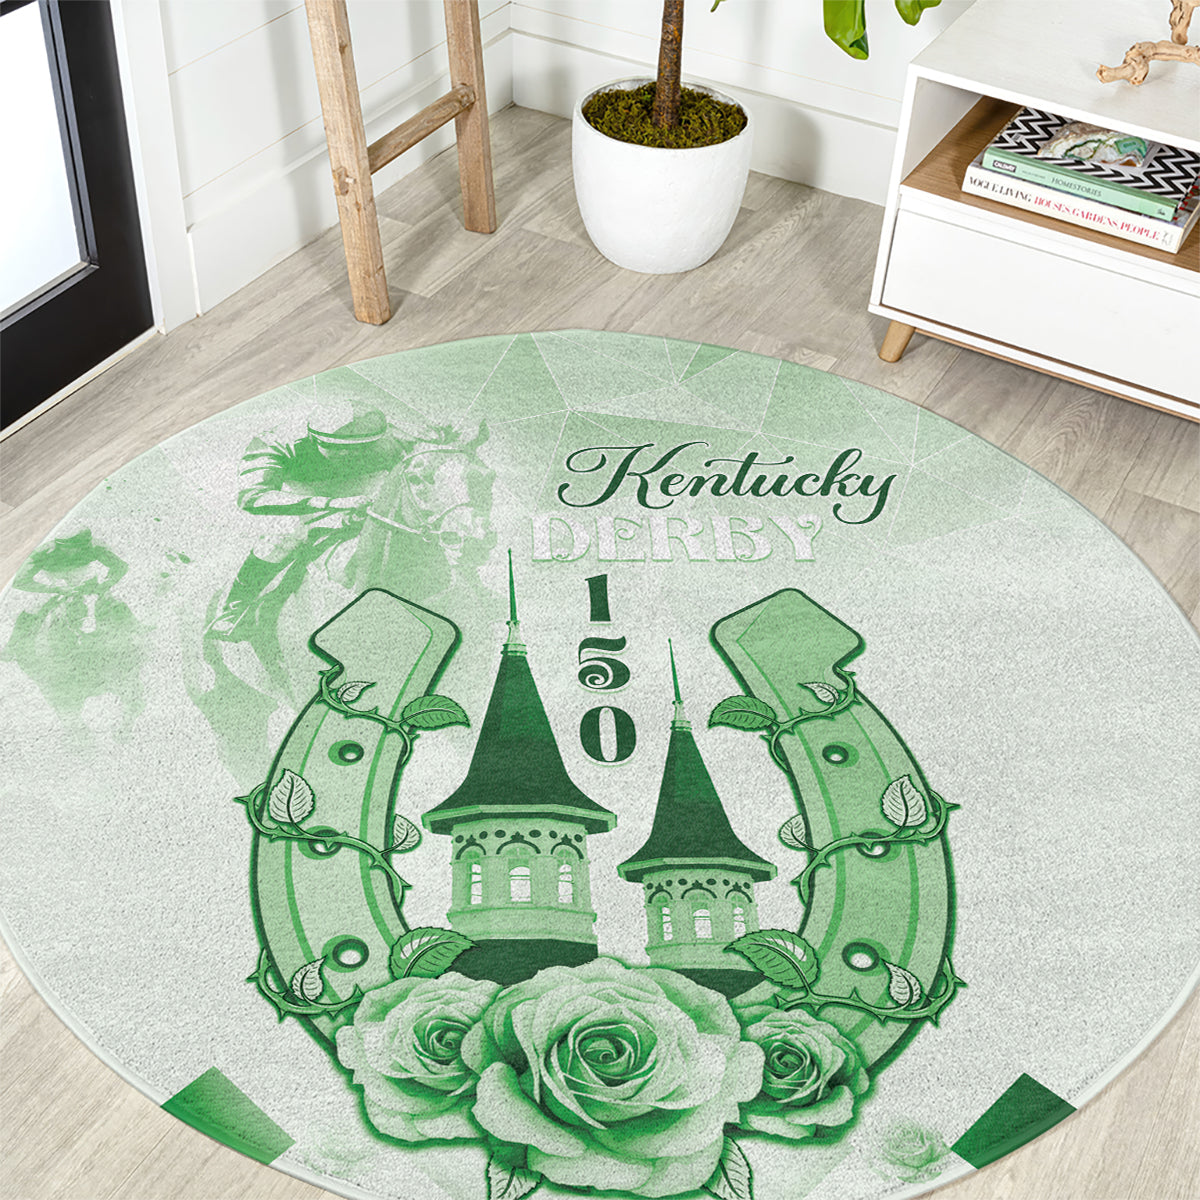 Kentucky Horse Racing Round Carpet 150th Anniversary Green Version